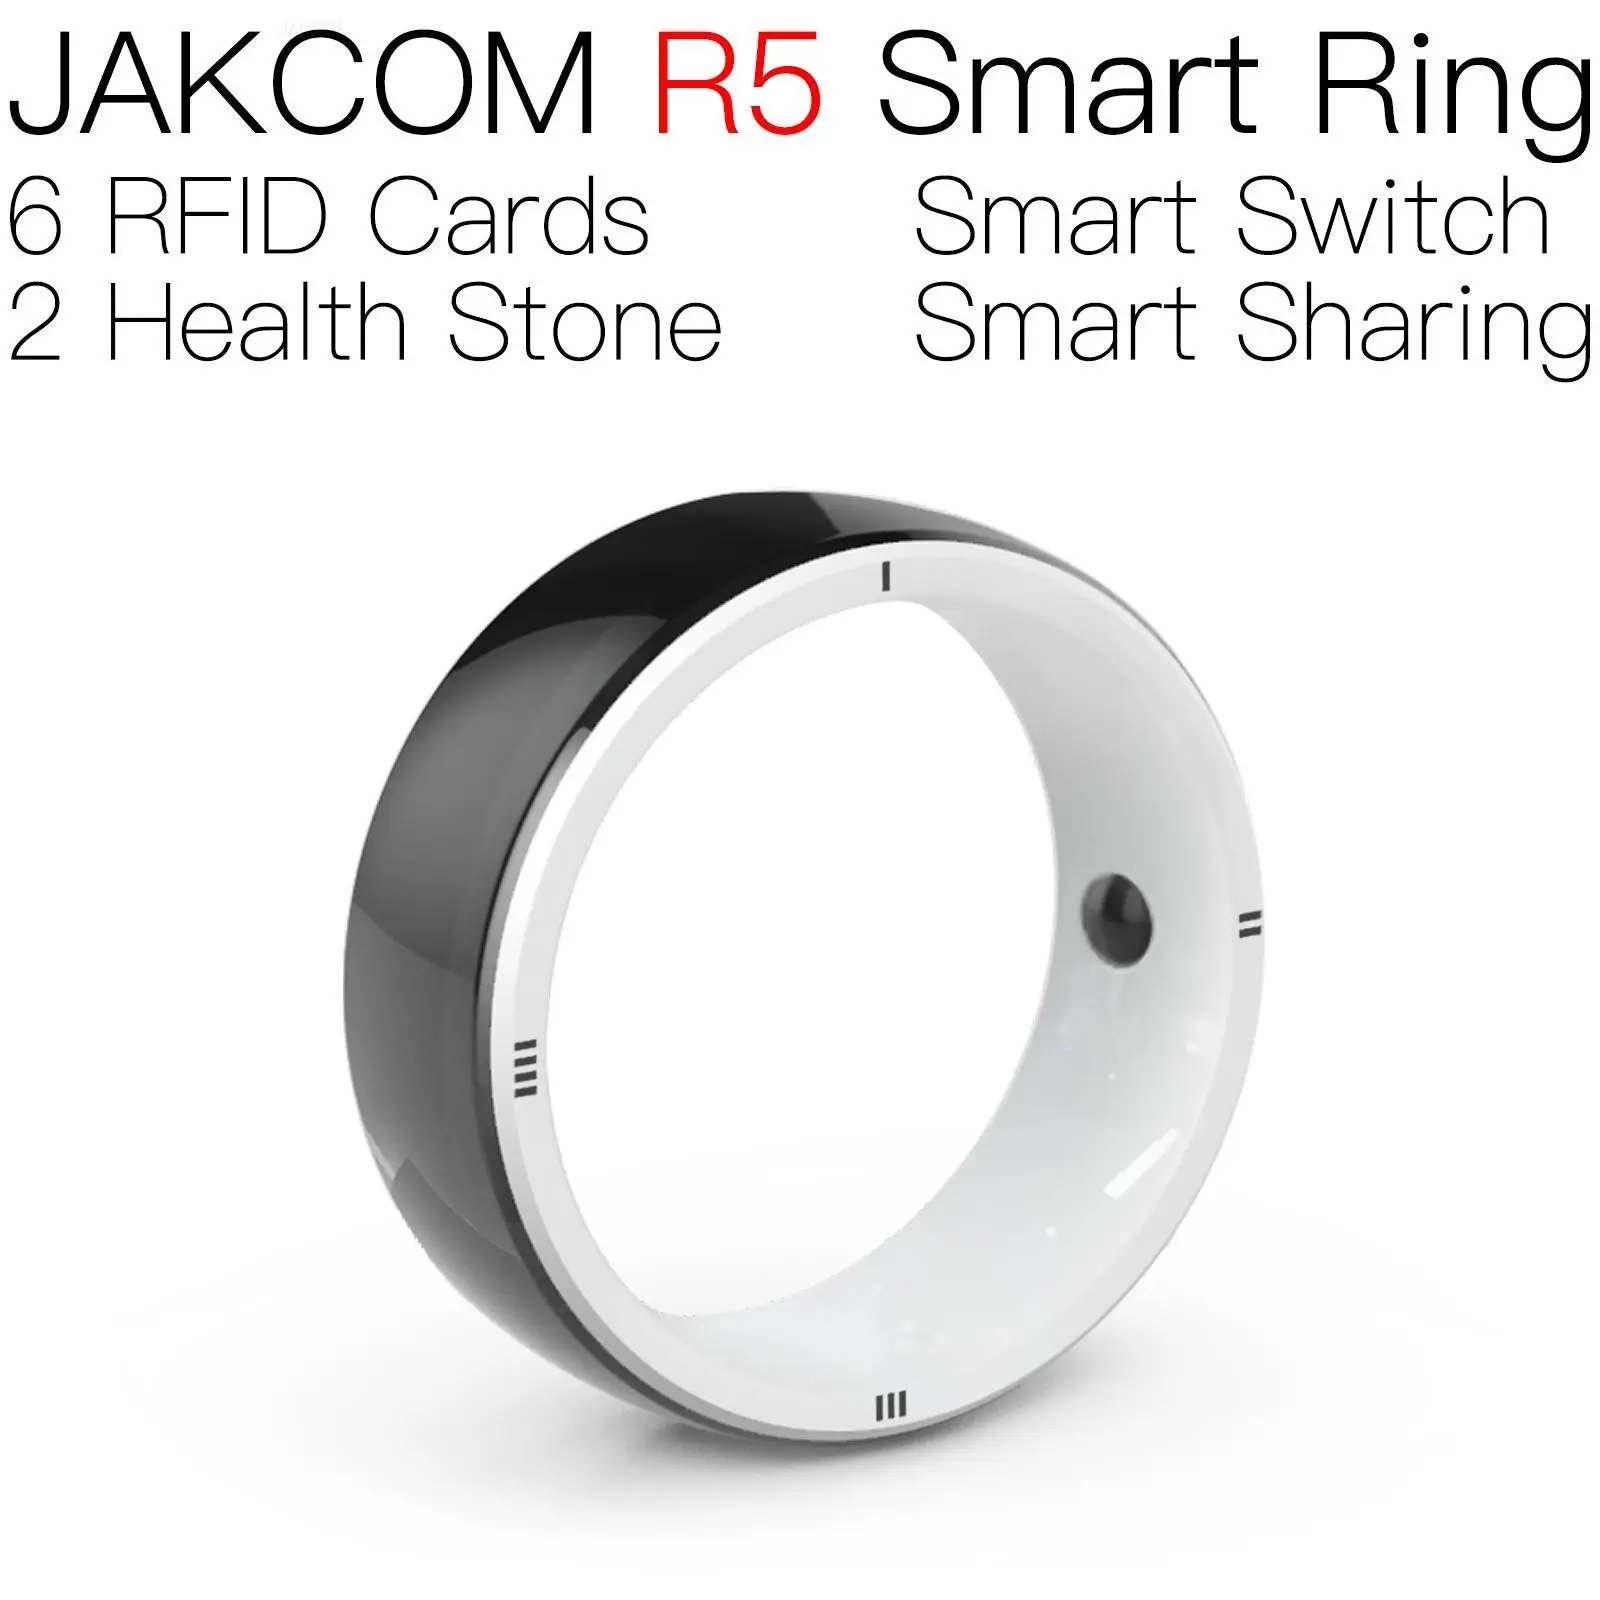 

JAKCOM R5 Smart Ring Match to gourde watch xiaomo magic camera automatic 3 gadget 10 home key clocks